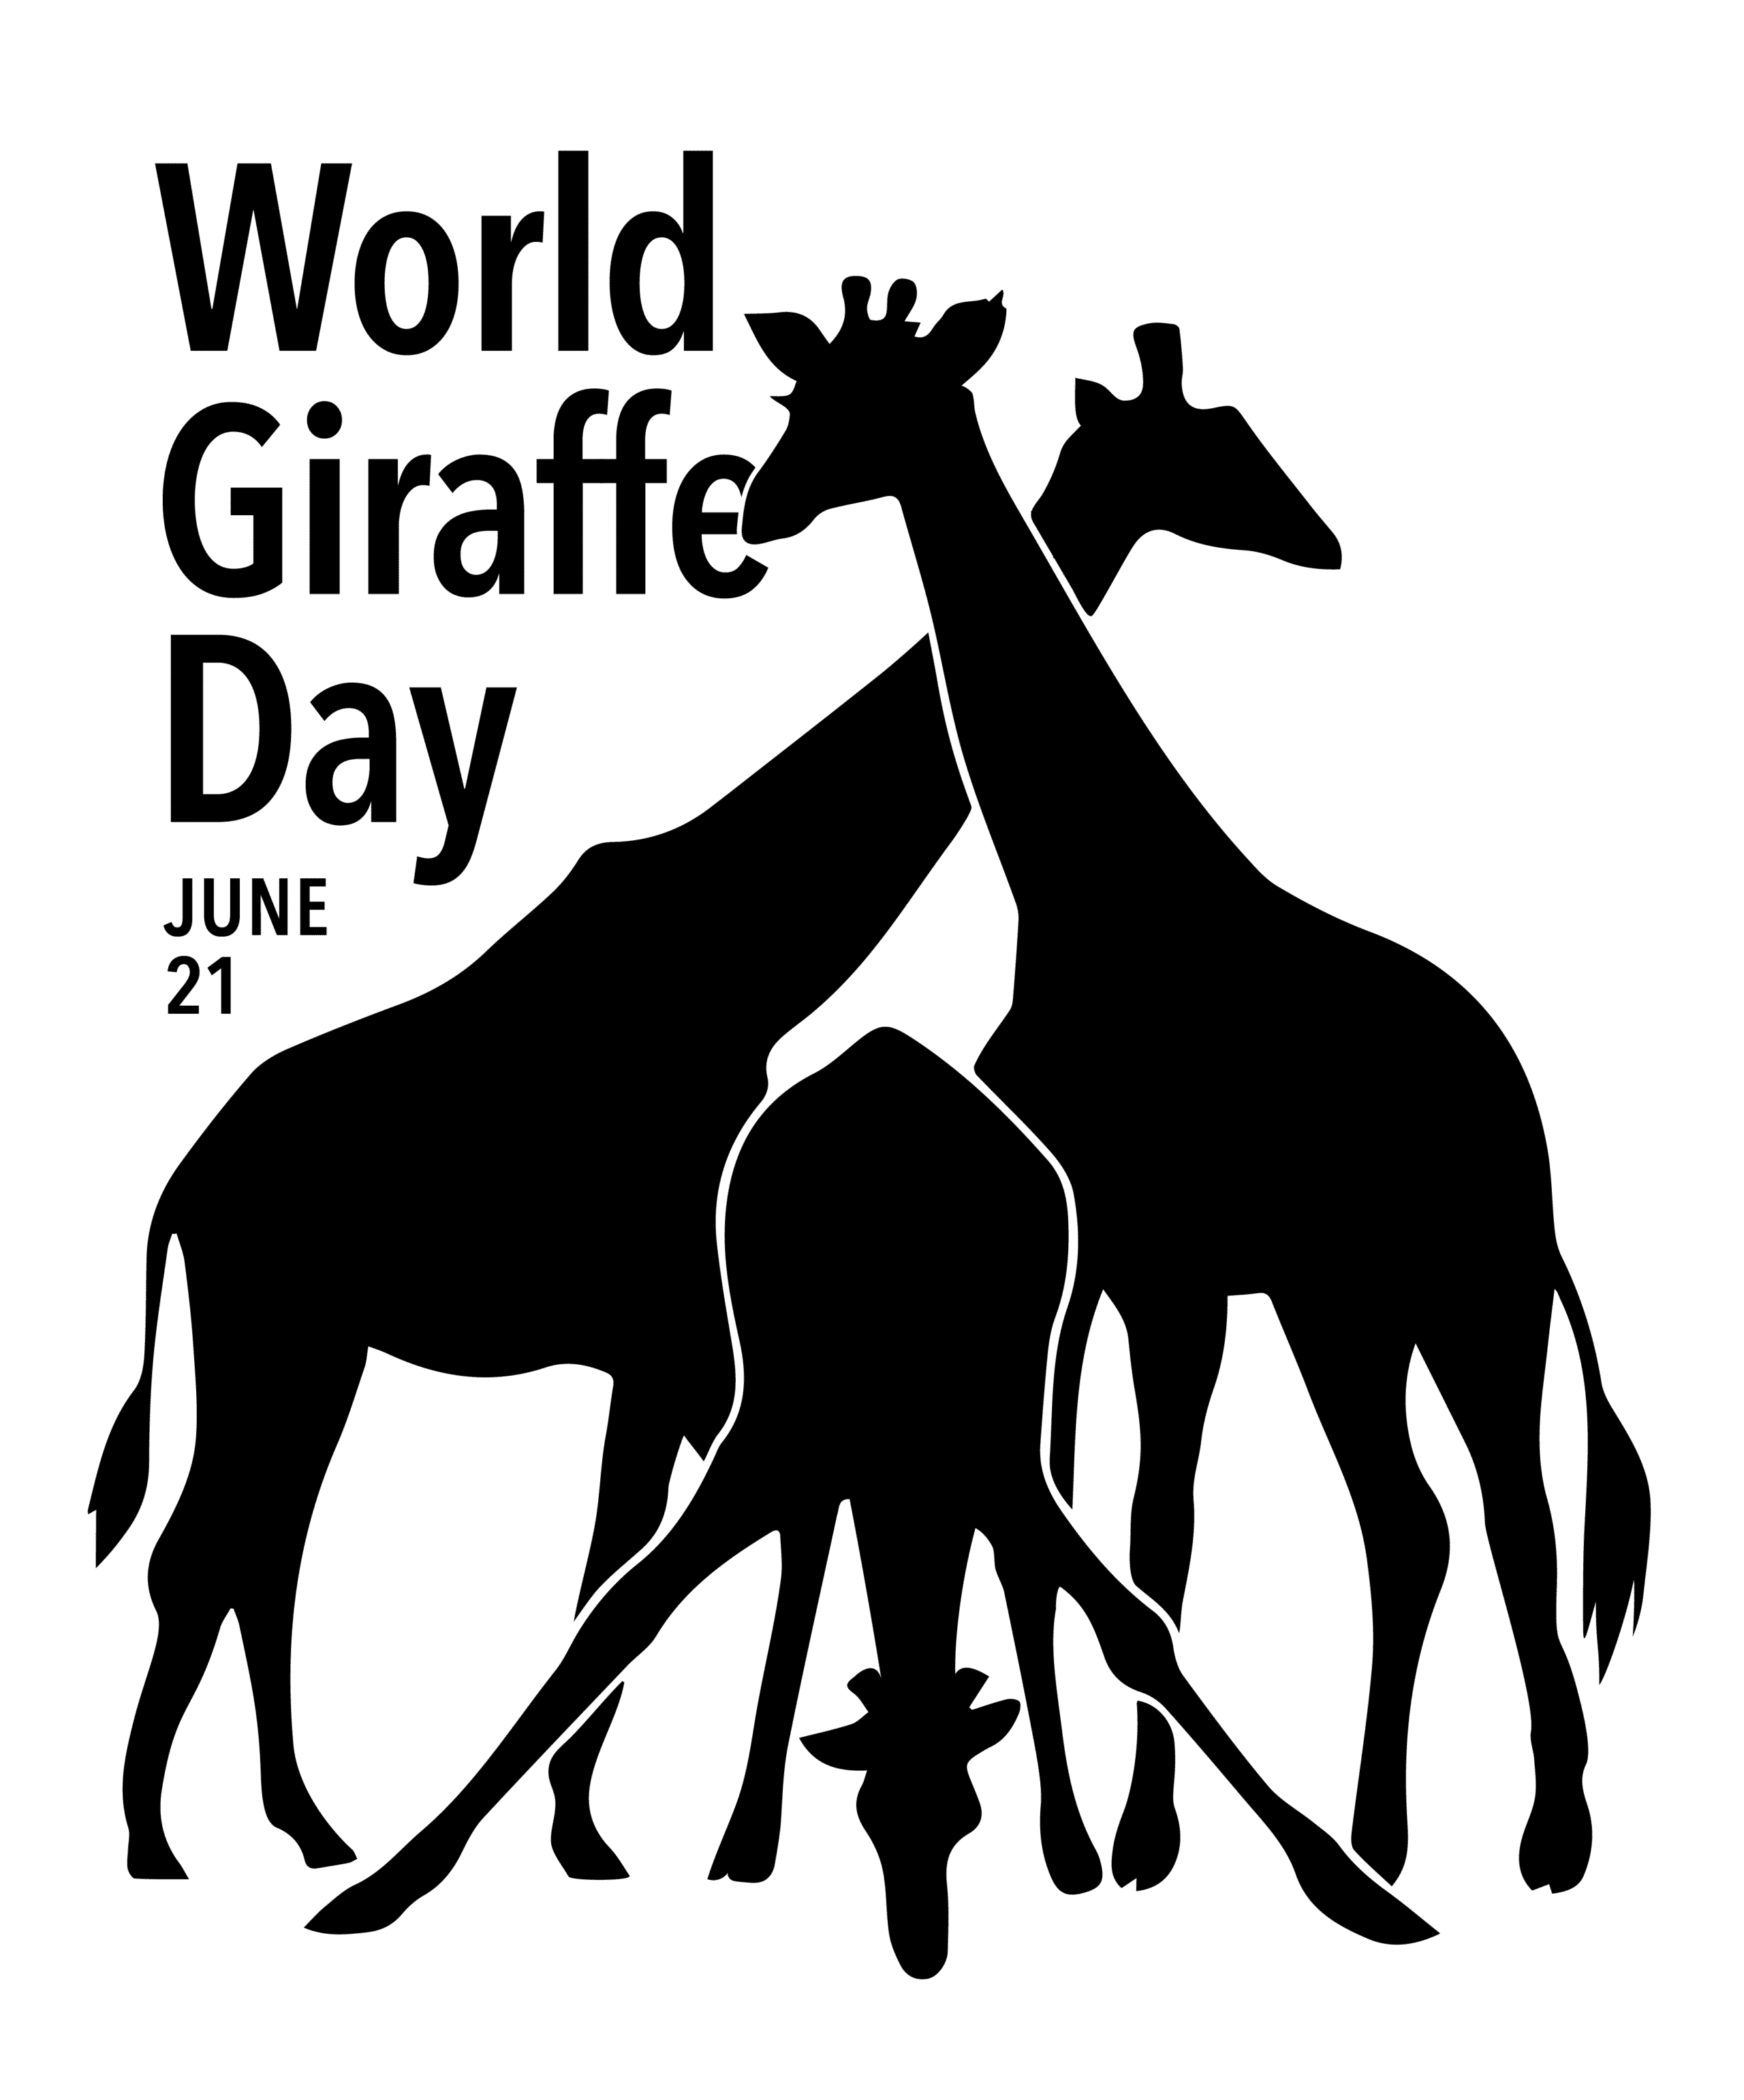 World Giraffe Day 21 June Resources